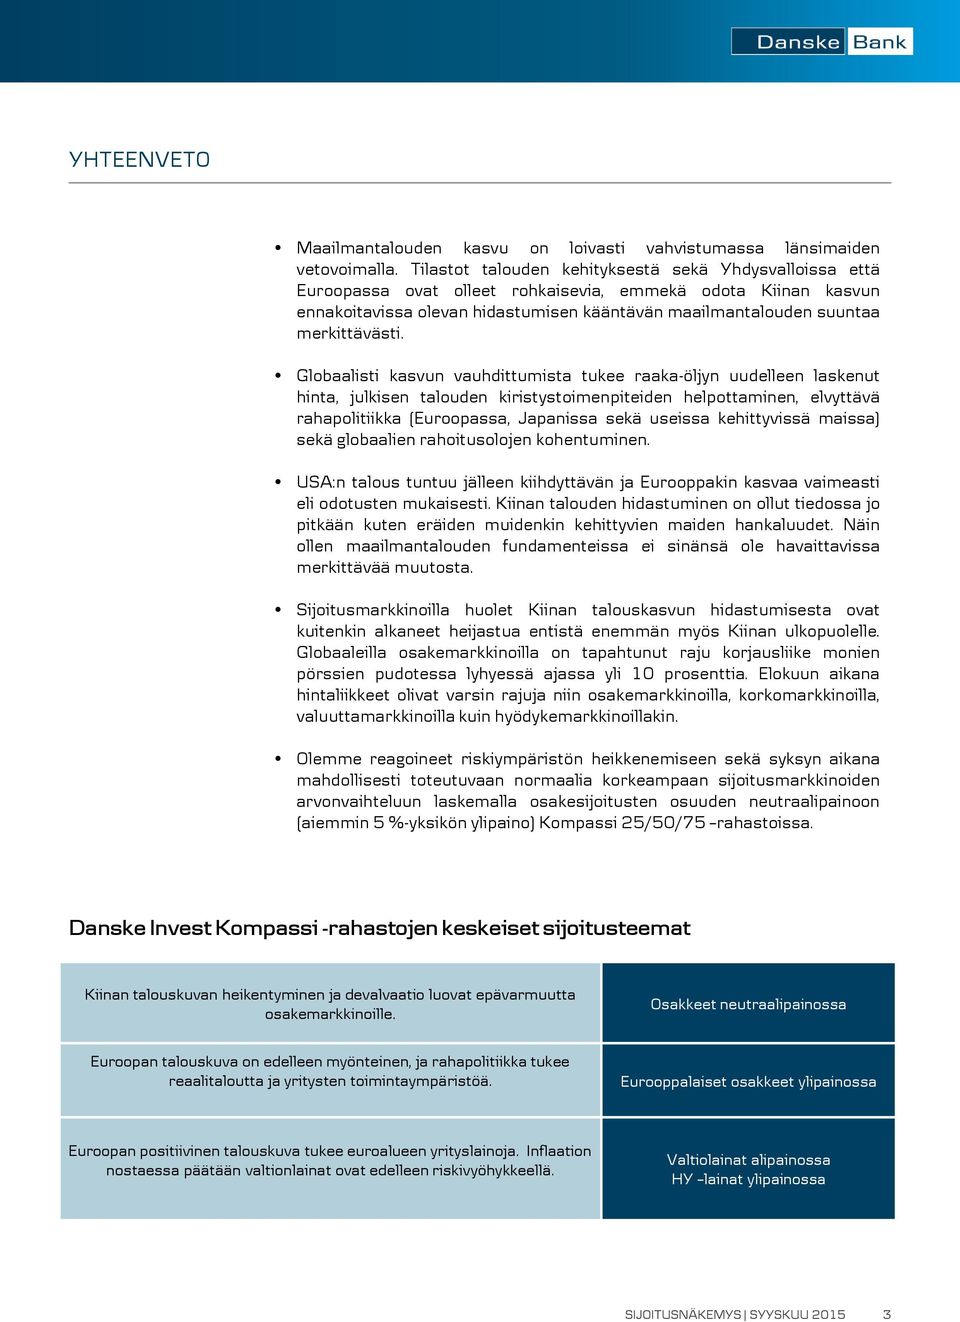 Danske Bank Oyj, Sijoitusnäkemys - PDF Free Download